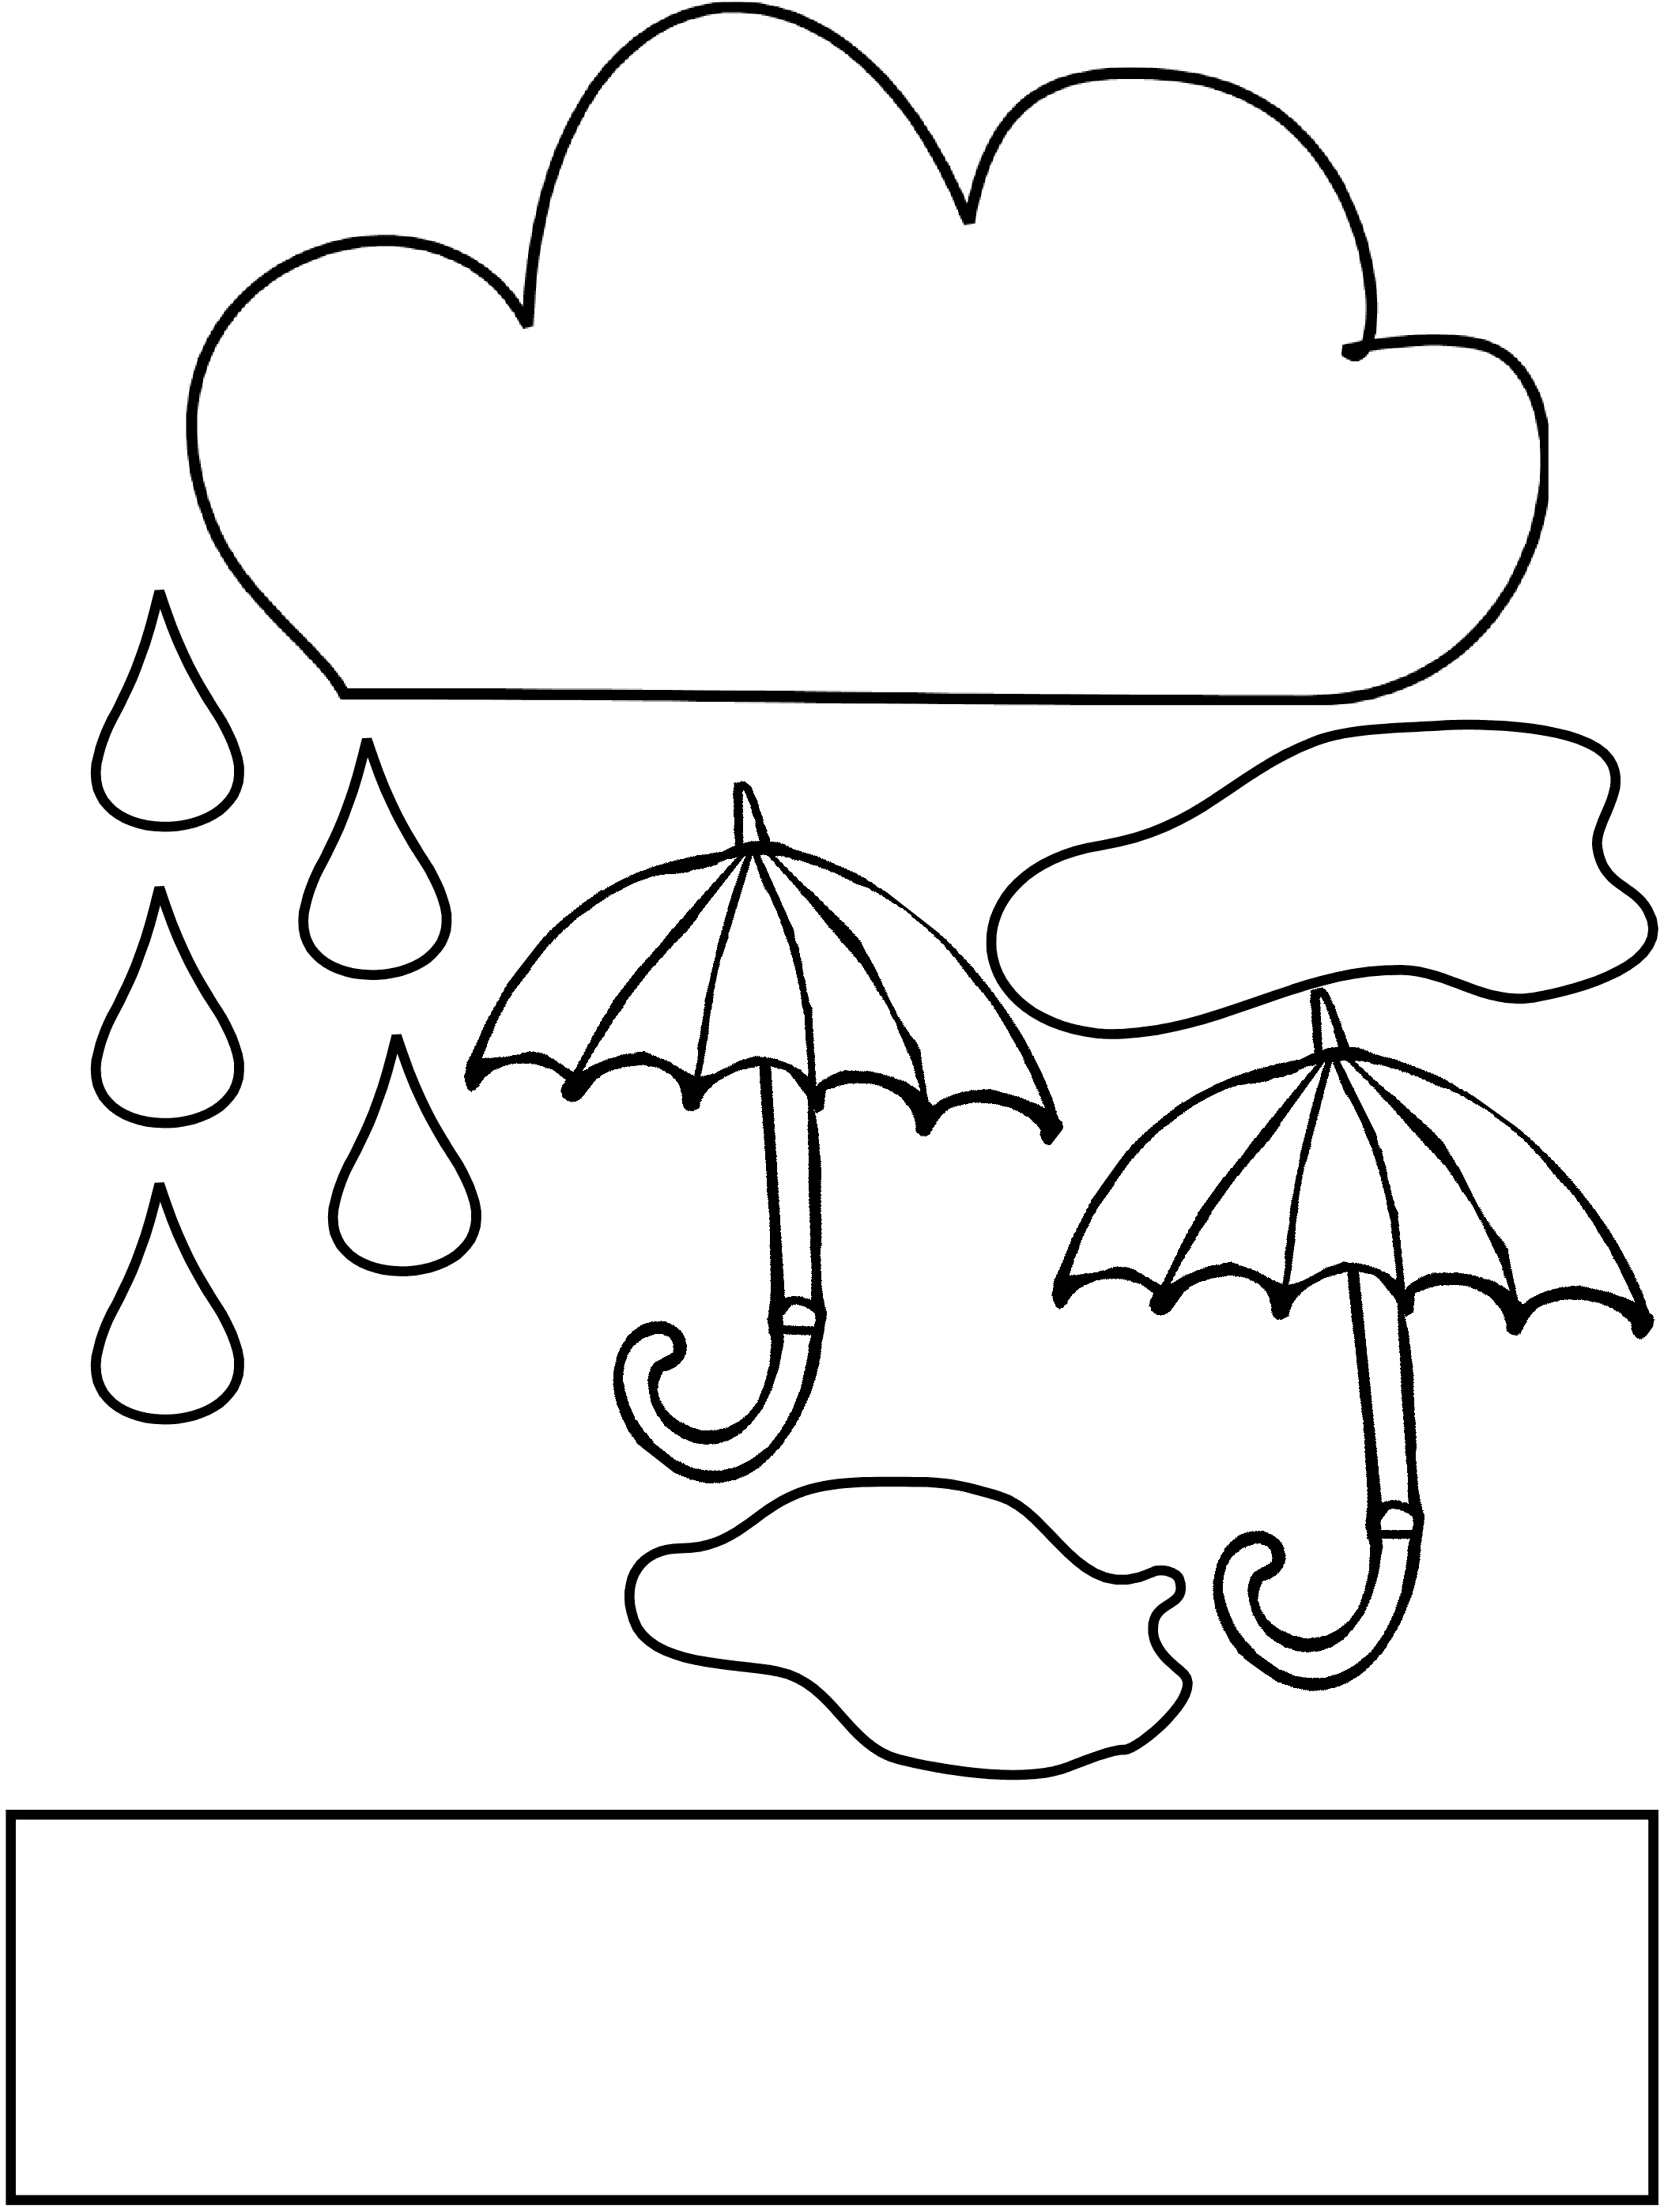 rain drop coloring page 8 10 from 77 votes rain drop coloring page 9 .. rain drop coloring pag